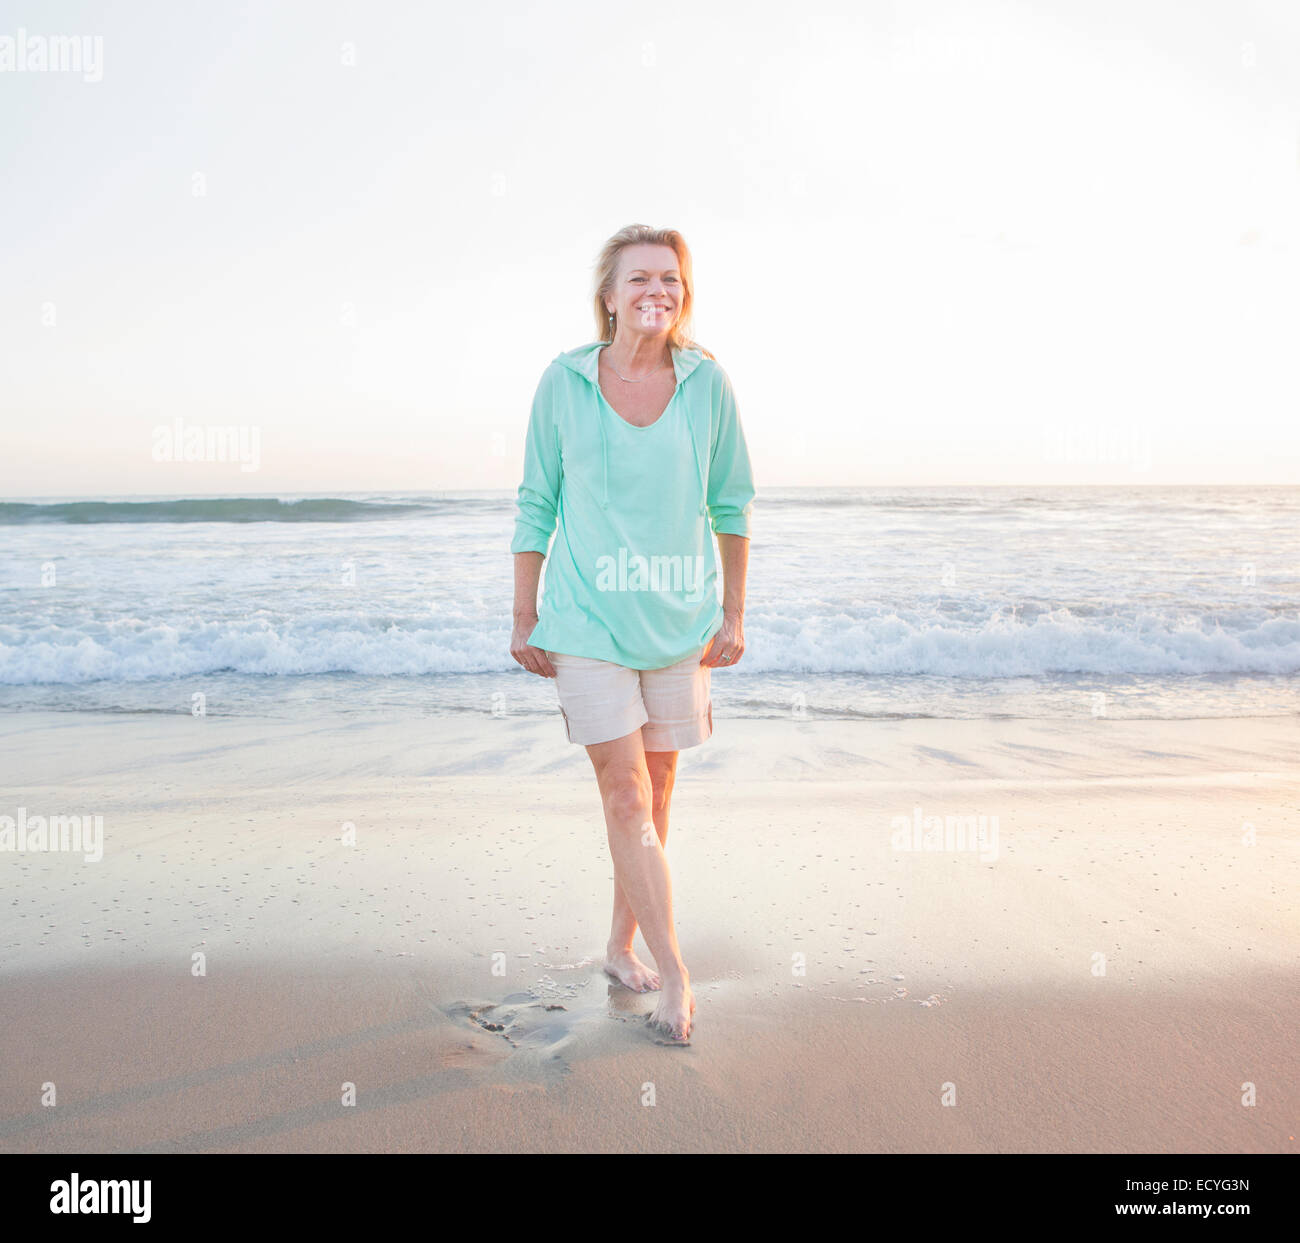 Caucasian woman smiling on beach Stock Photo